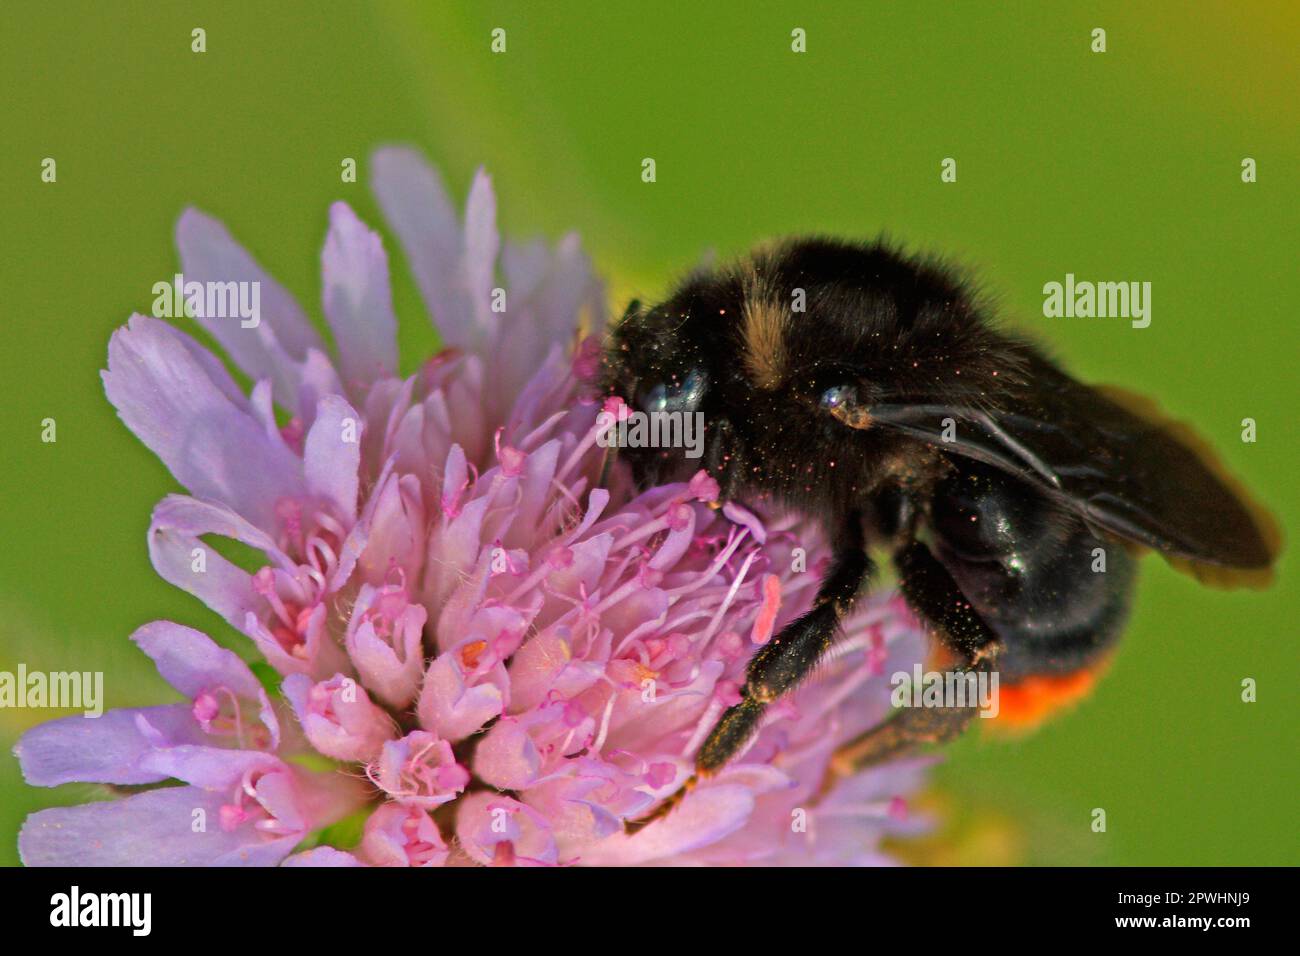 Parasitic bumblebee on field widow's-flower Stock Photo